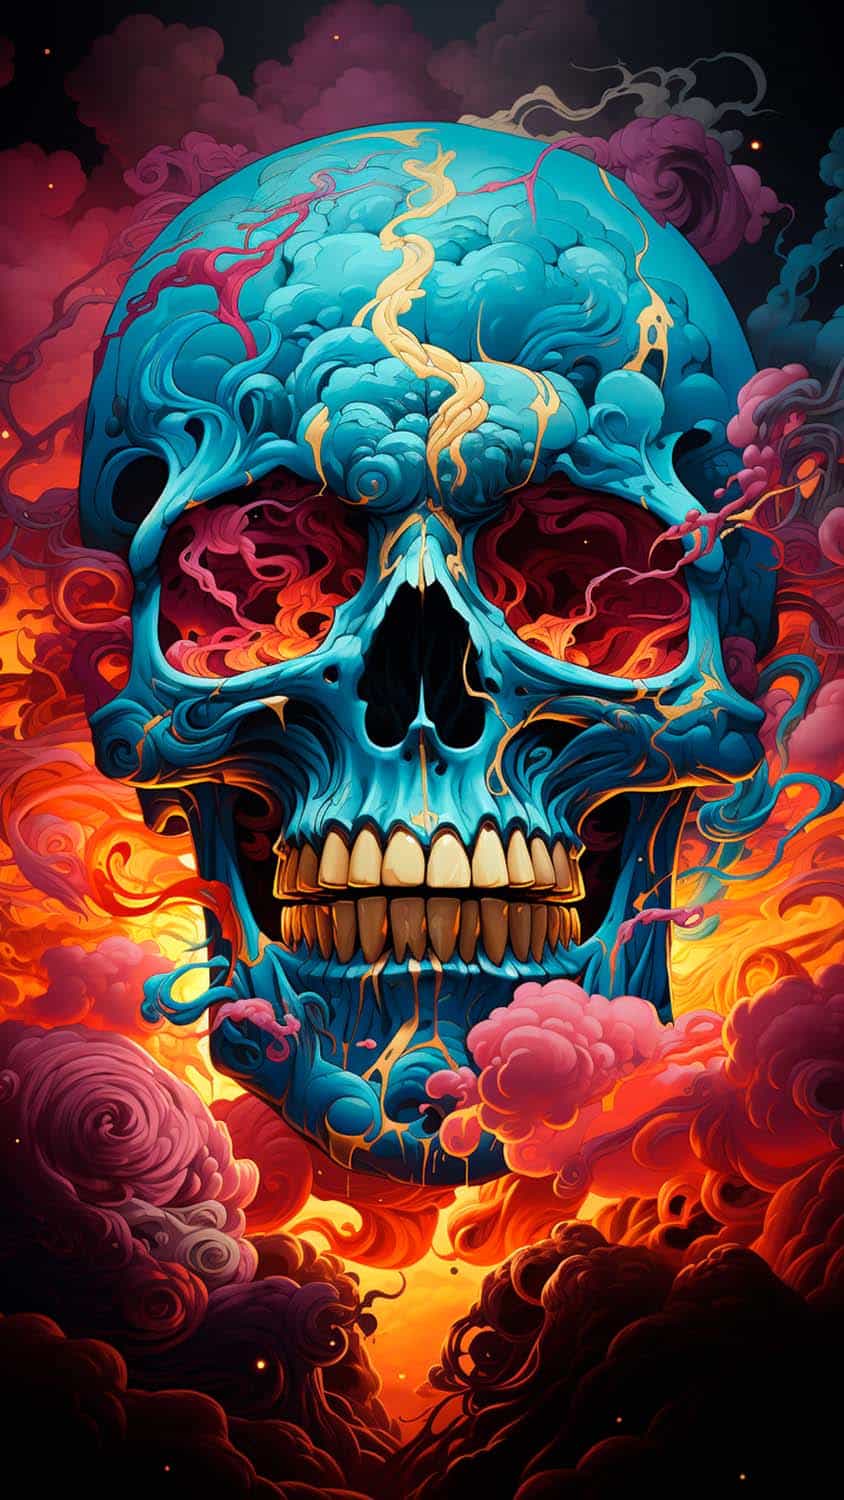 Skull Art Halloween iPhone Wallpaper 4K